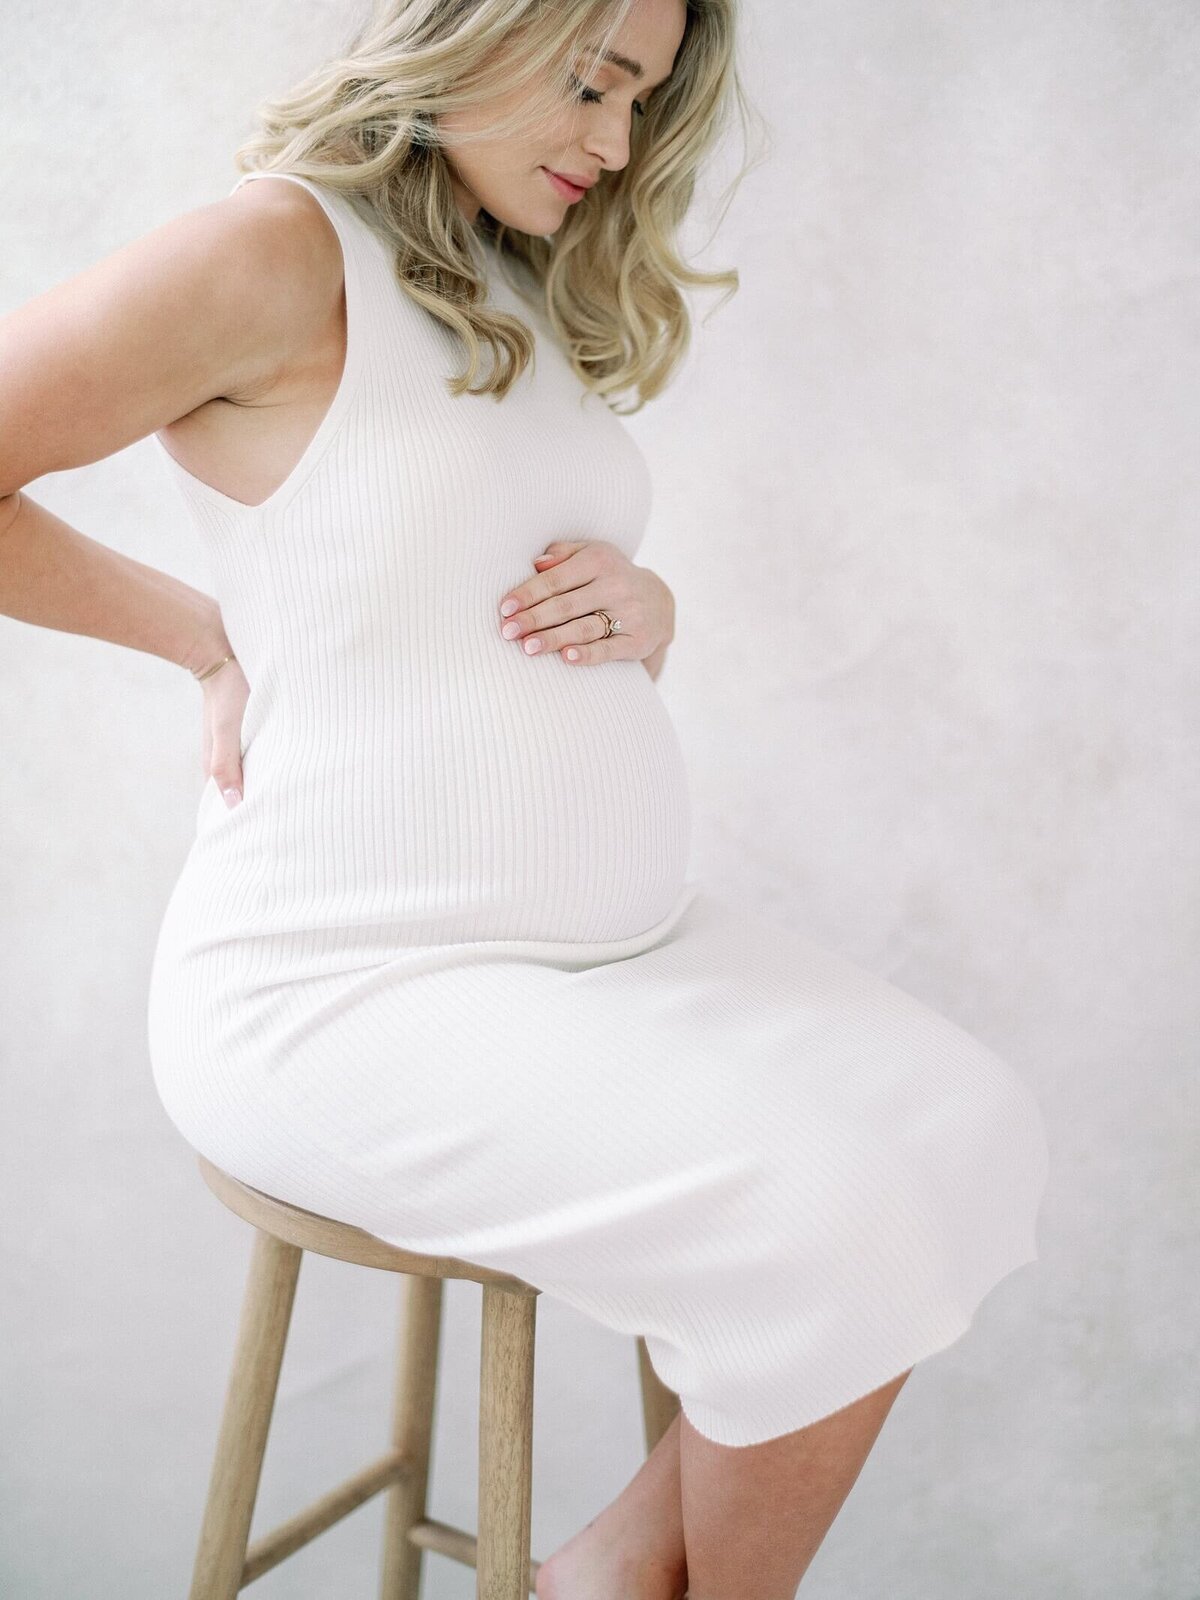 seattle-maternity-photographer-jacqueline-benet_0027